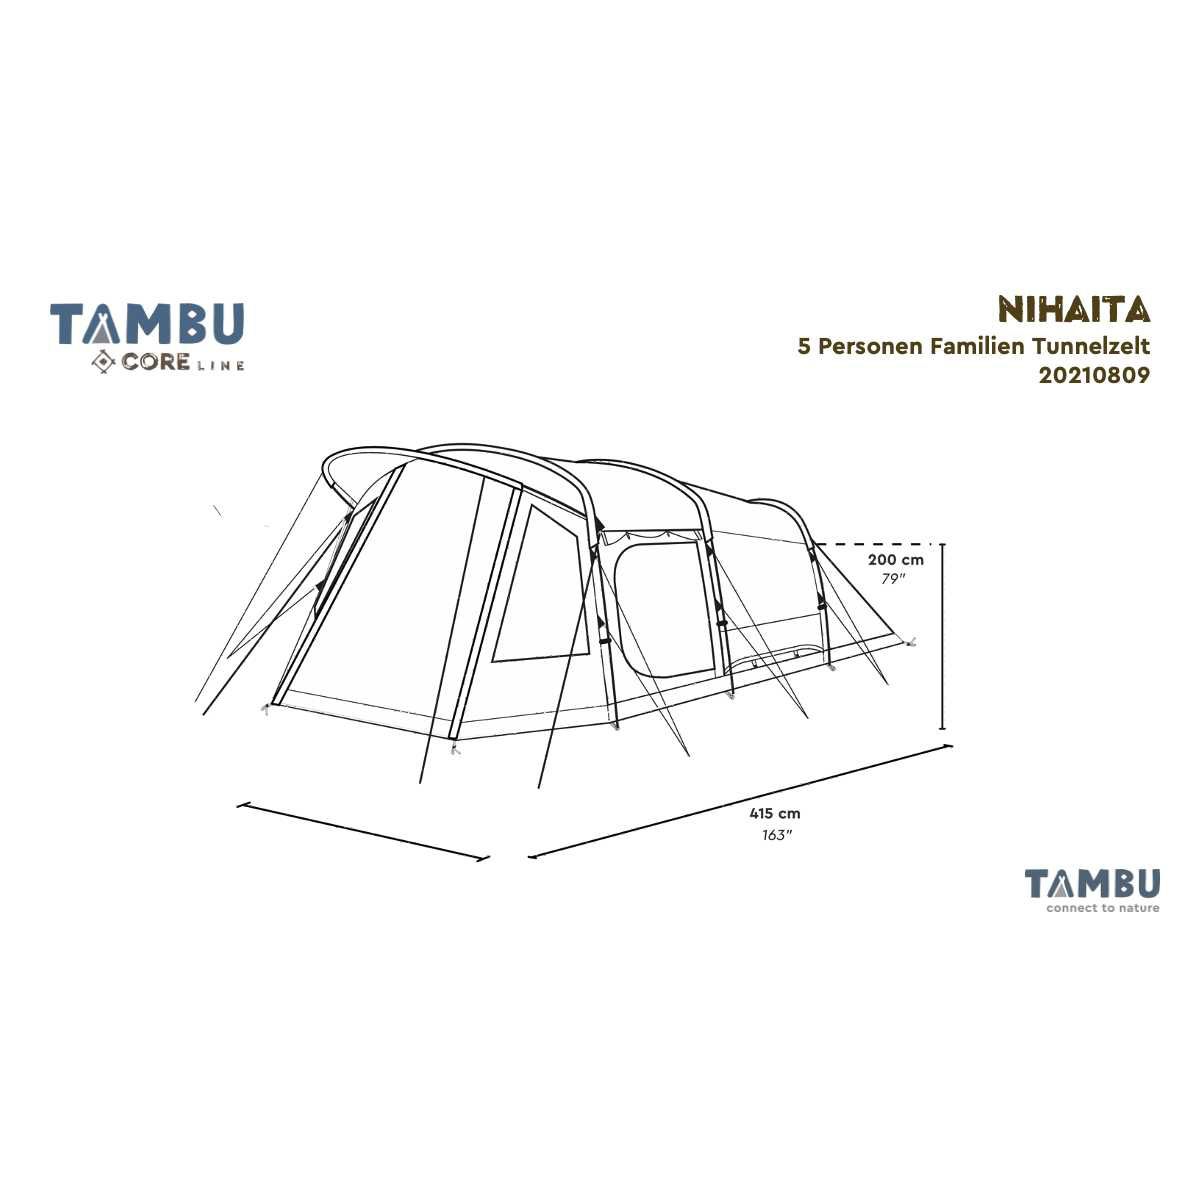 TAMBU NIHAITA Familien Tunnelzelt Beige 5 Personen - 20210809